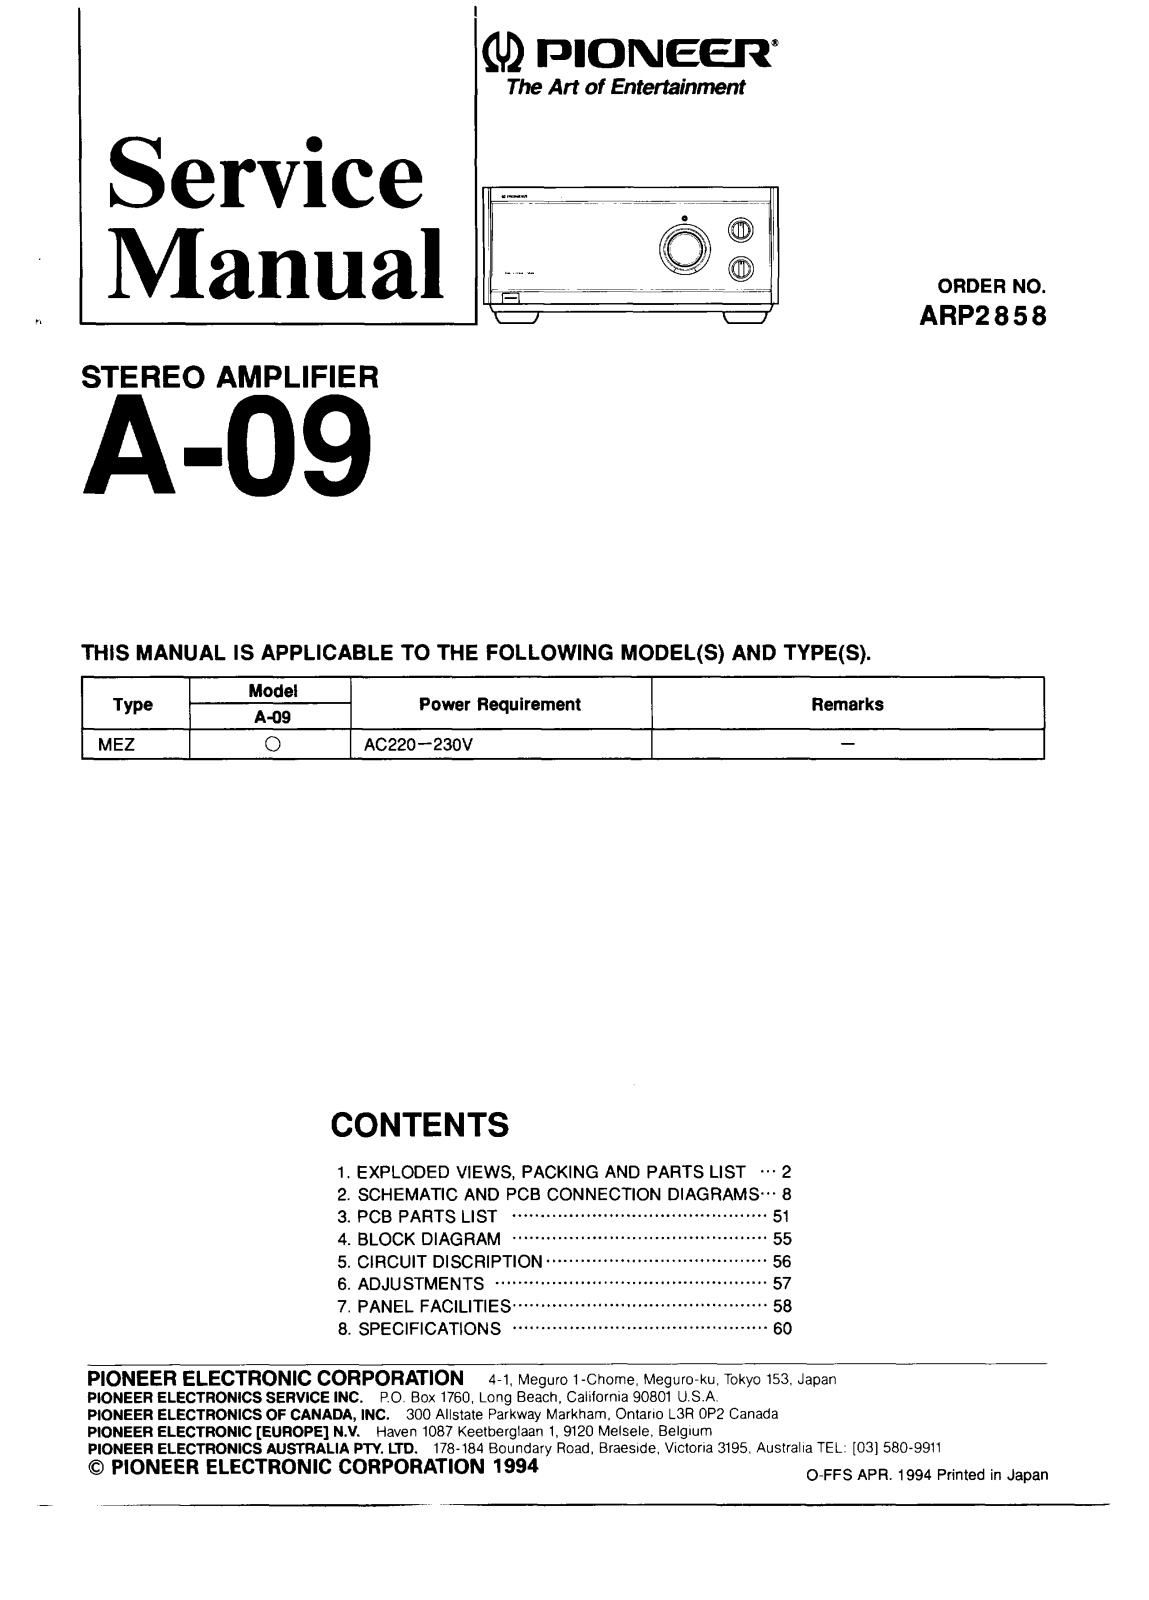 Pioneer A-09 Service manual